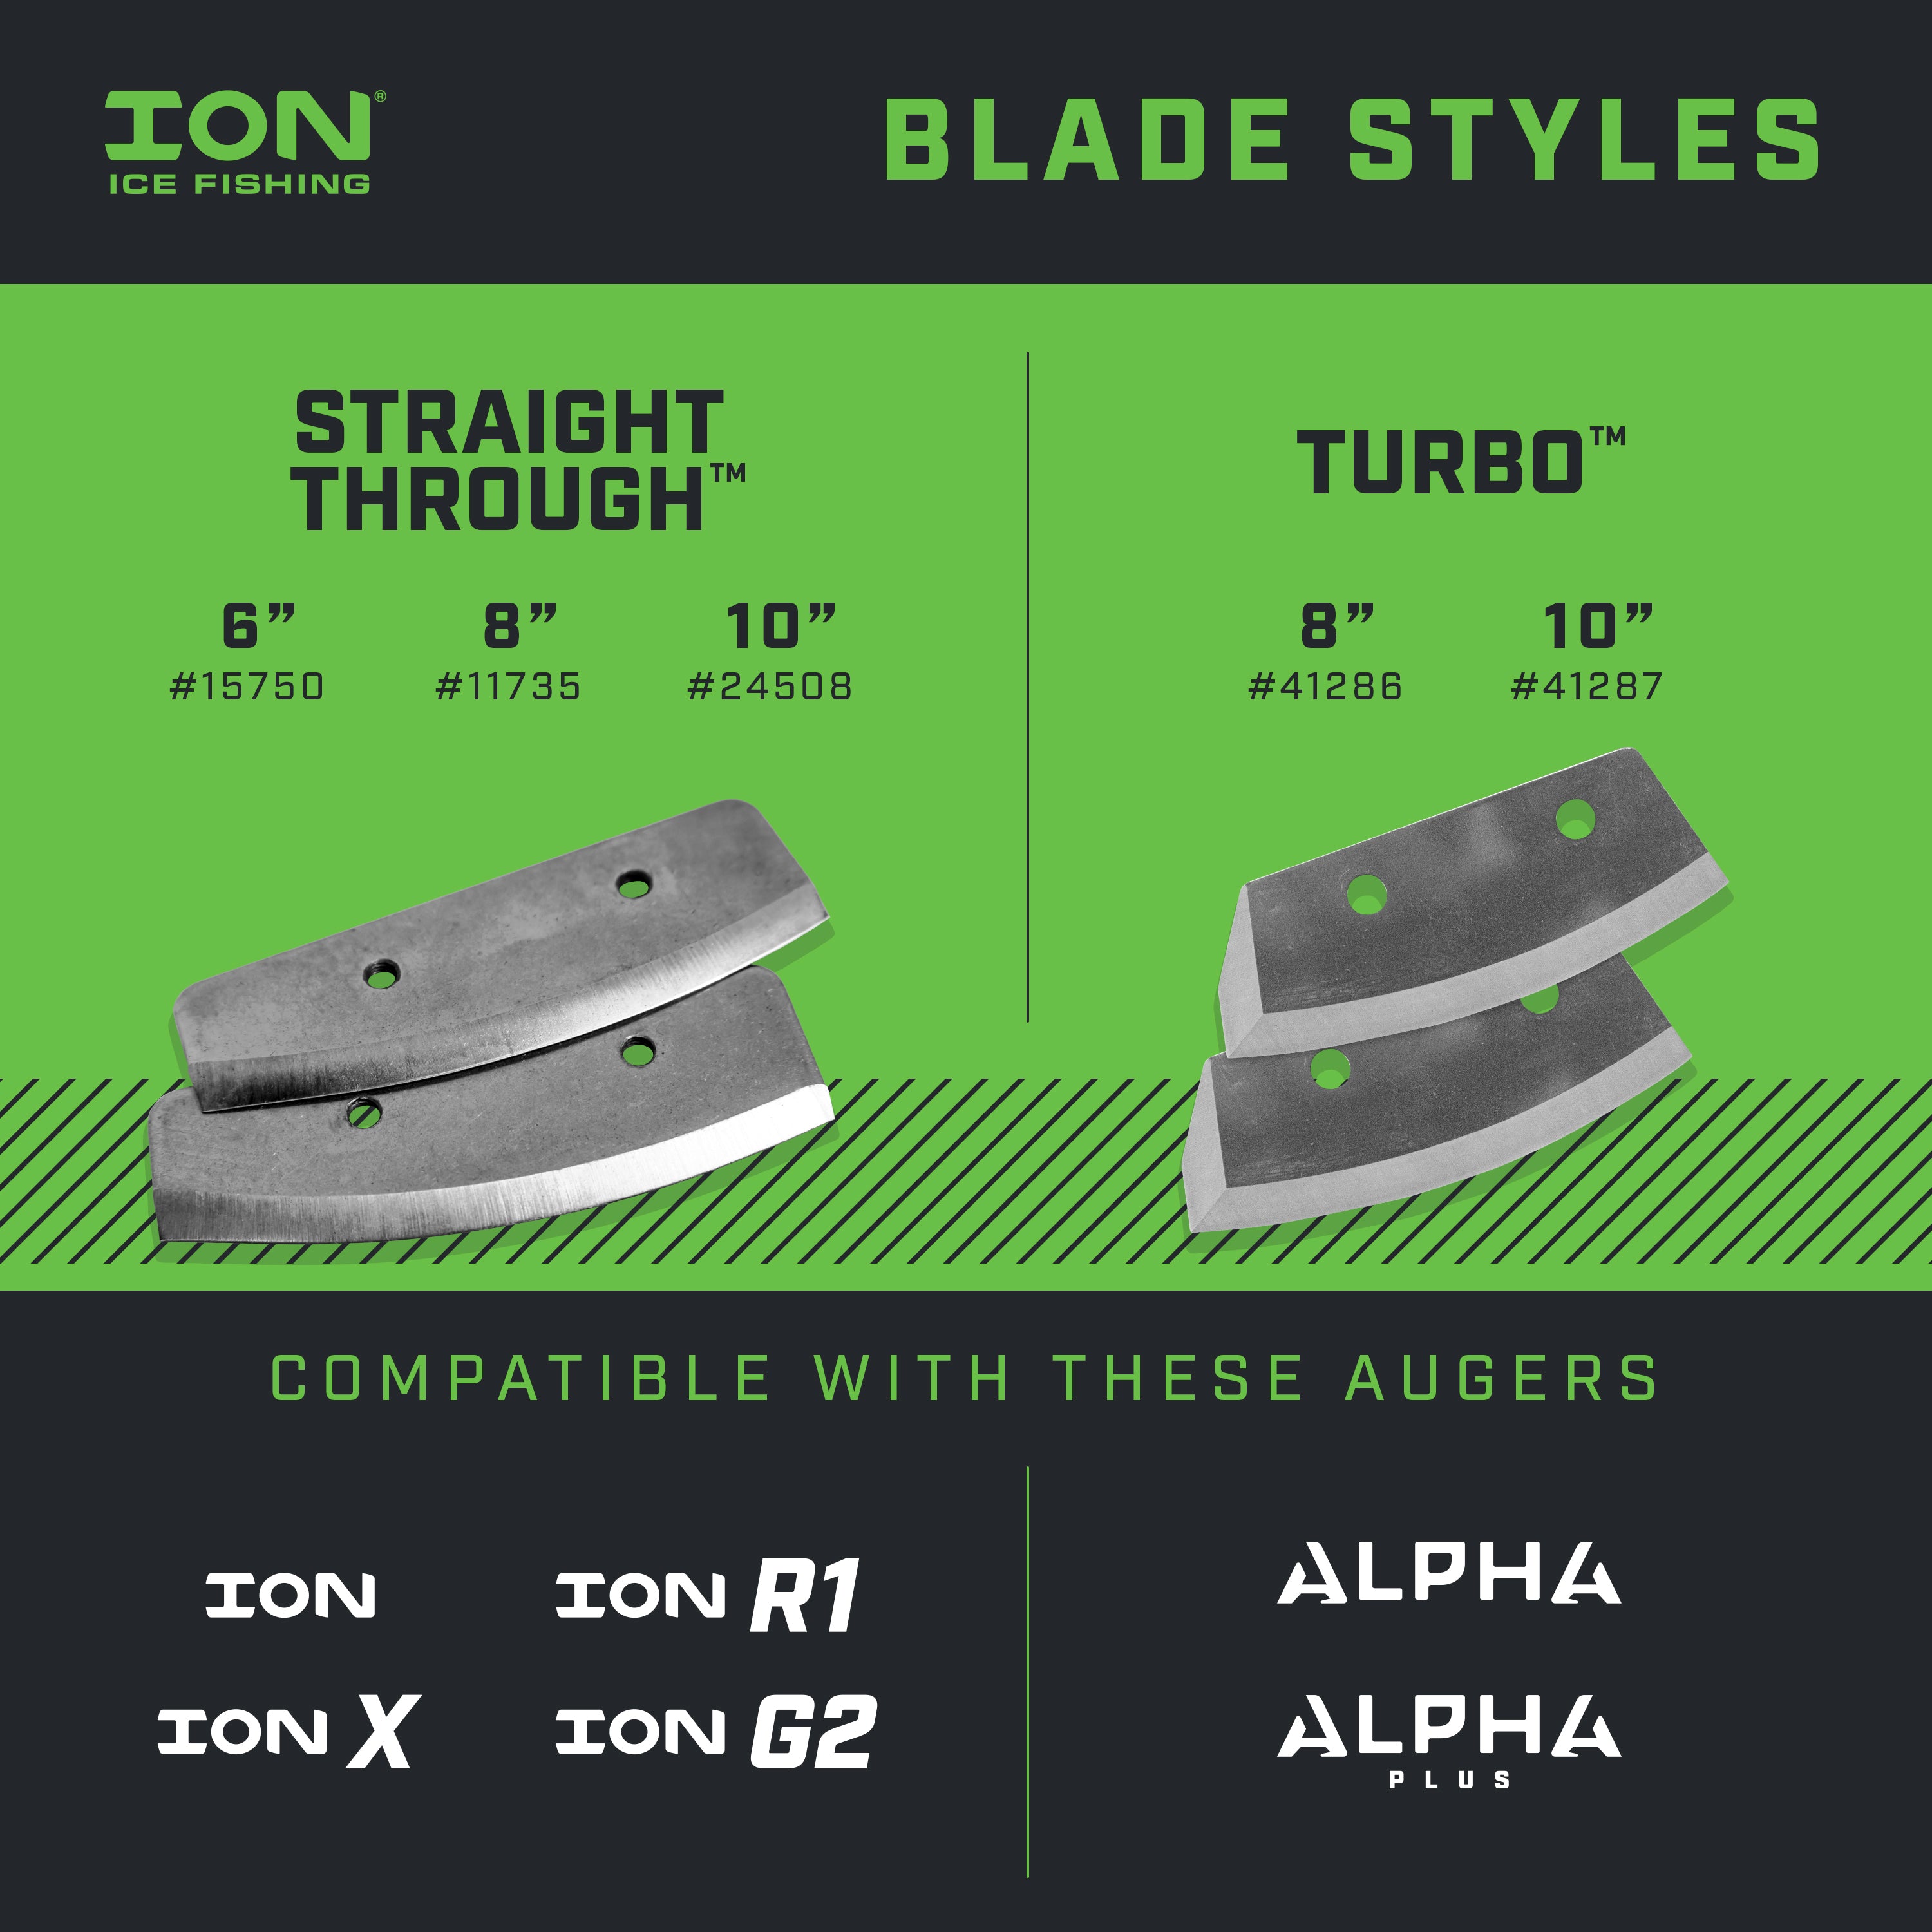 Turbo™ Blades